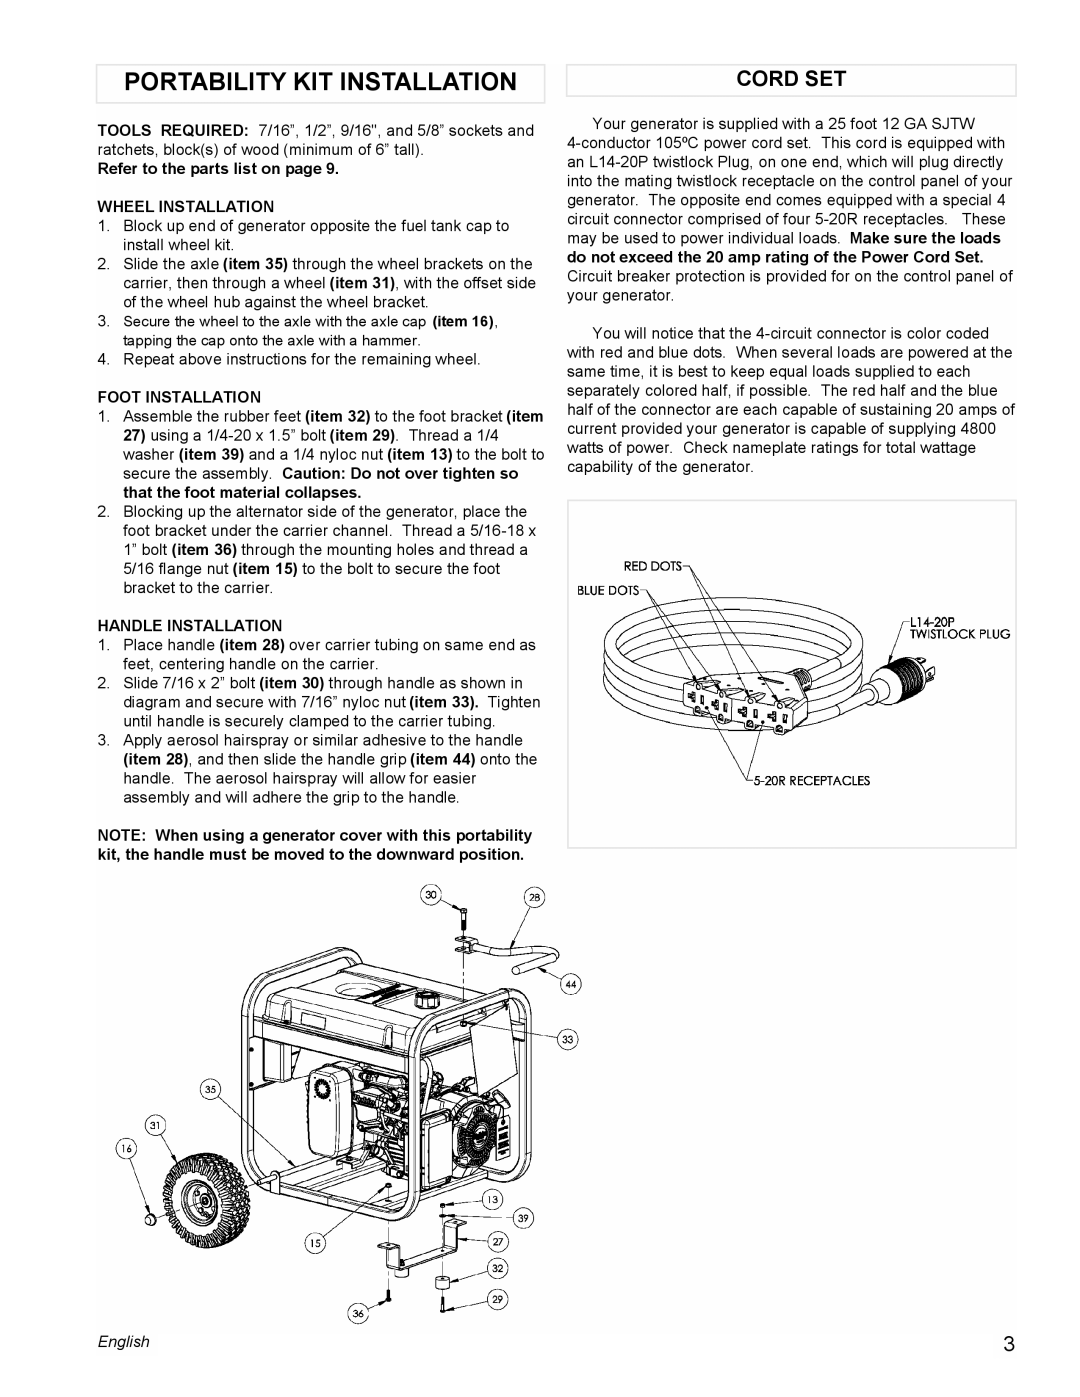 Powermate PM0435000 manual Portability Kit Installation, Cord Set, English 